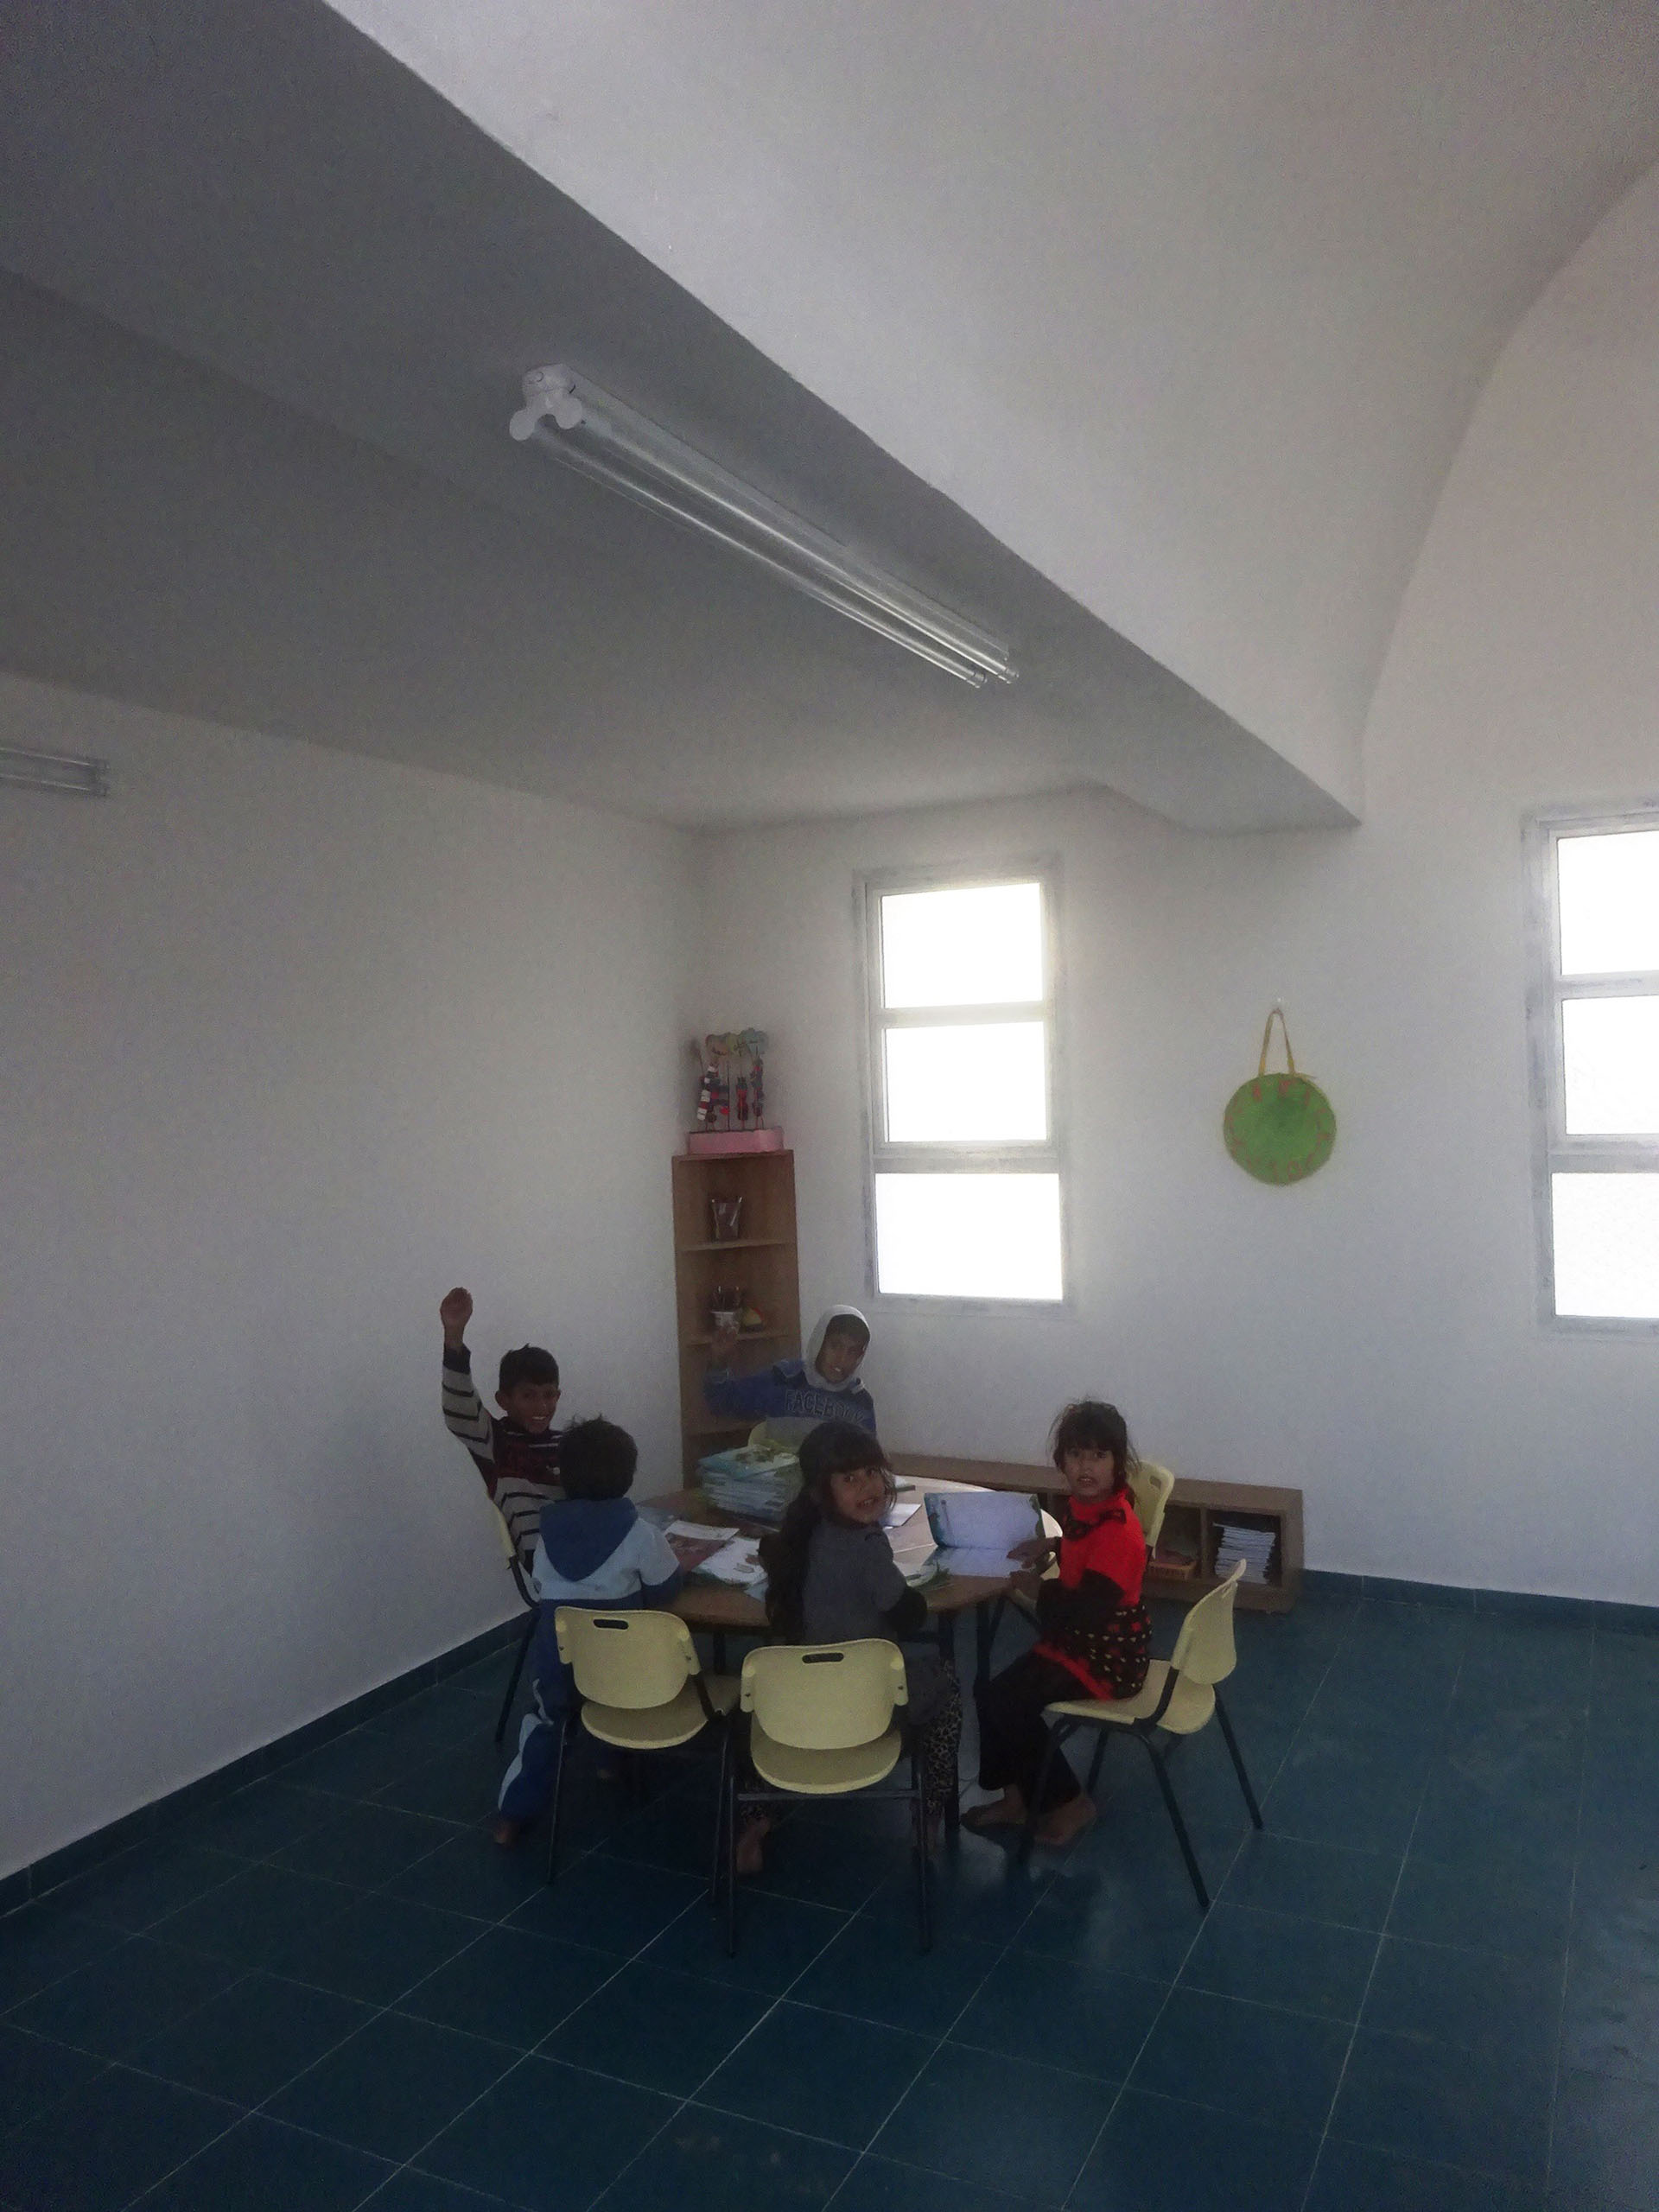 <p>Internal view of a classroom</p>